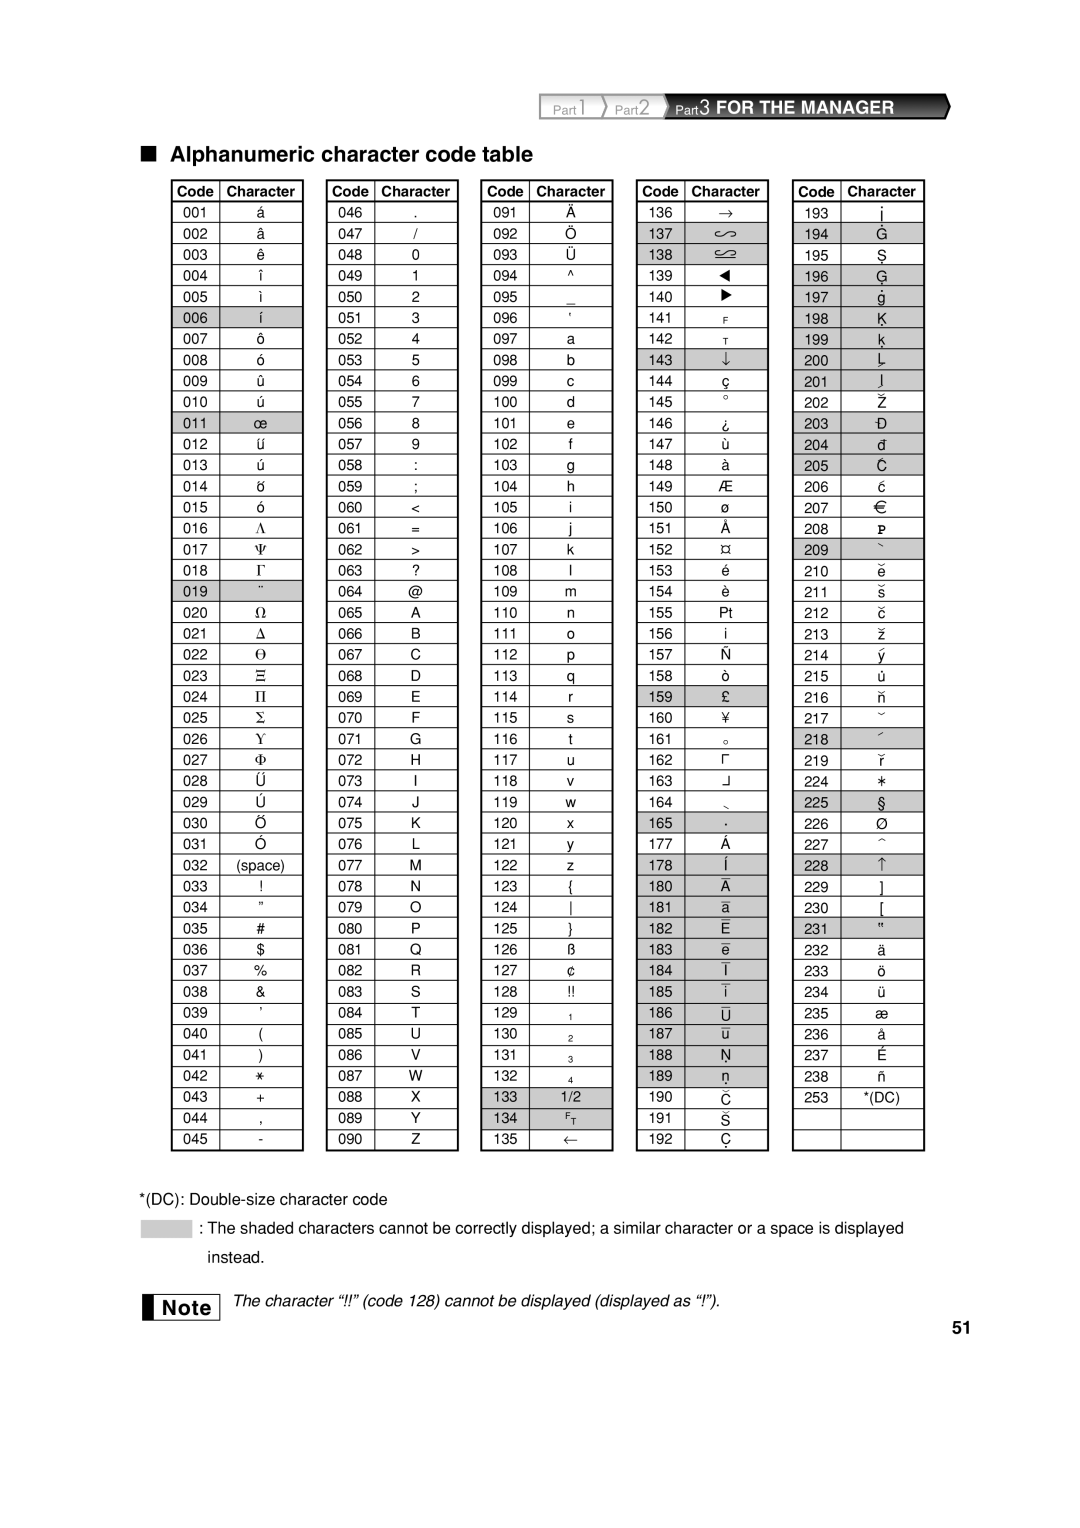 Sharp XE-A303 Alphanumeric character code table, Part1 Part2 Part3 FOR THE MANAGER, 231 ”, Code Character 